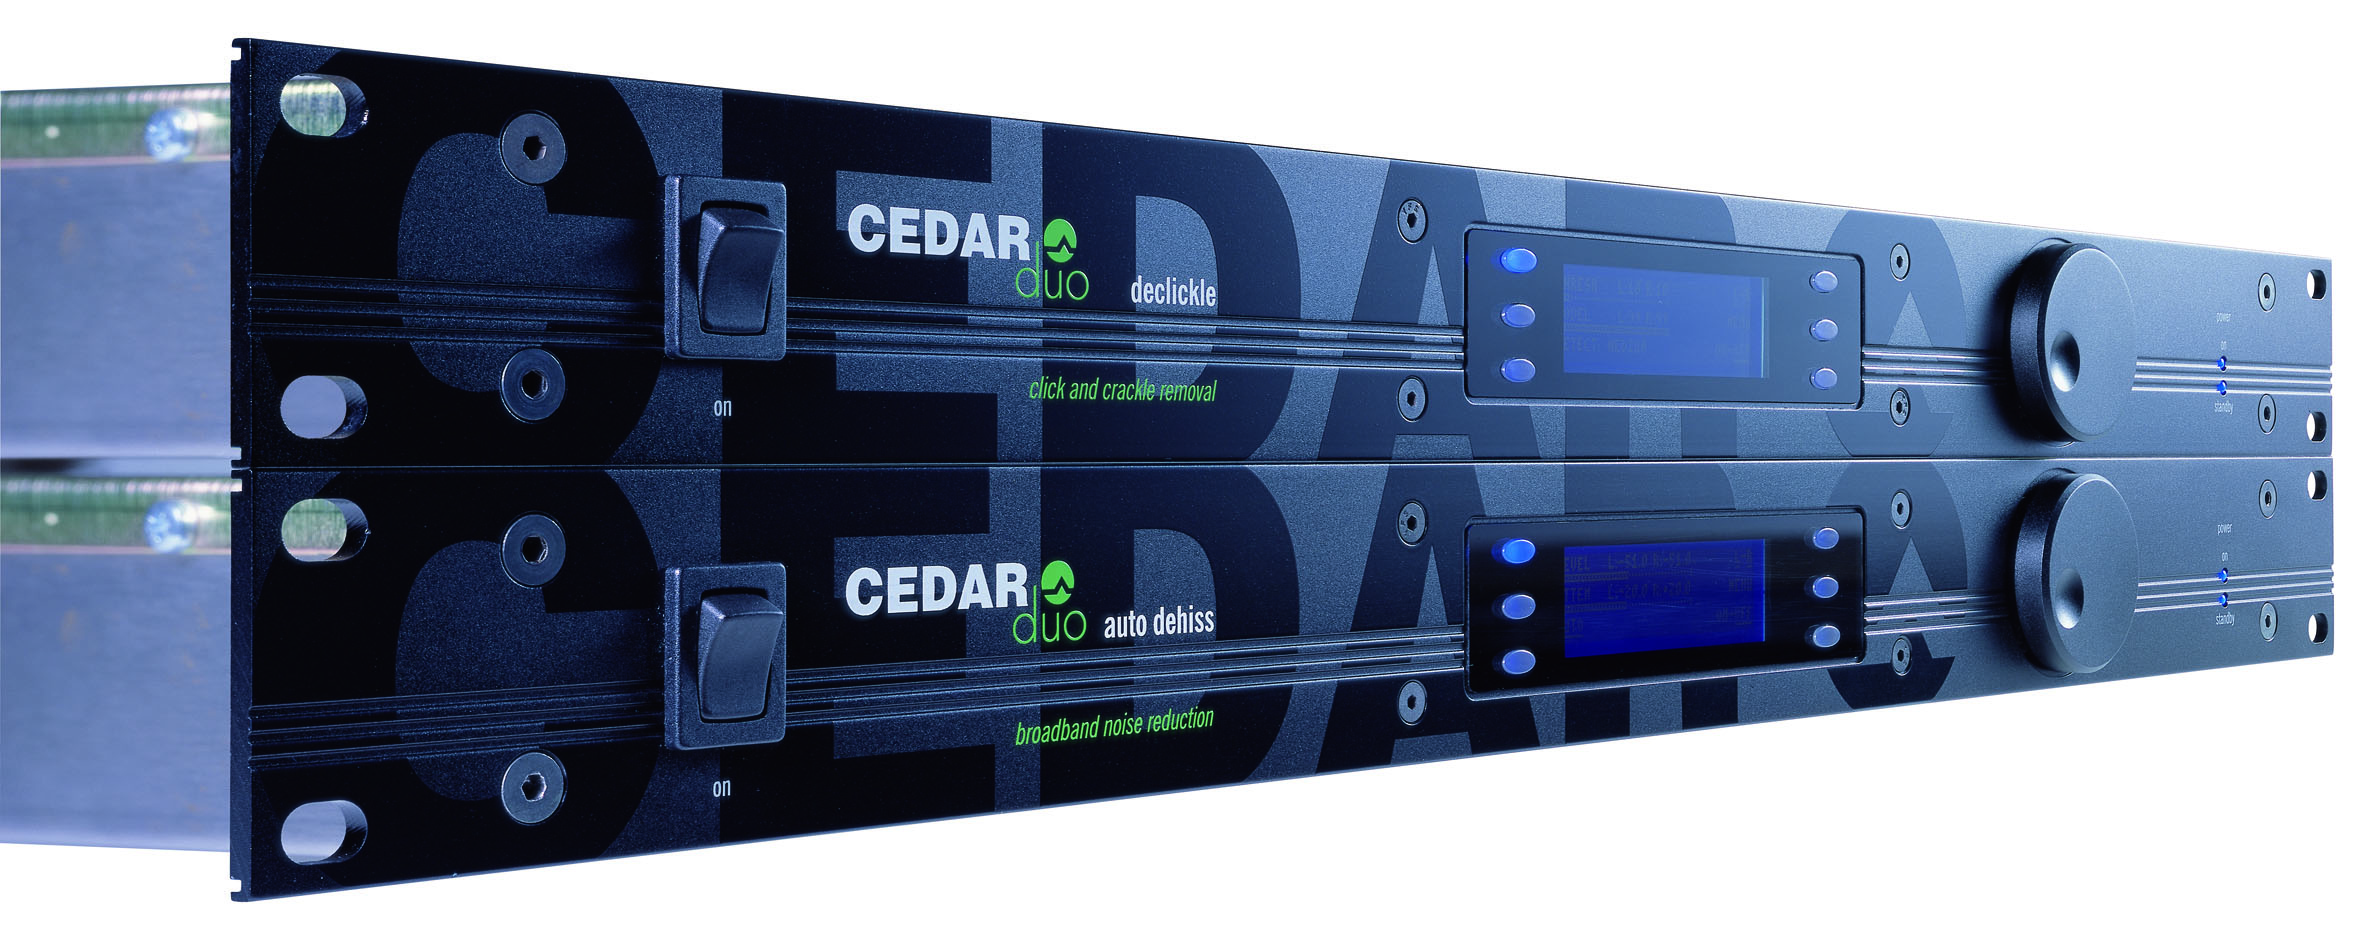 CEDAR DNS One